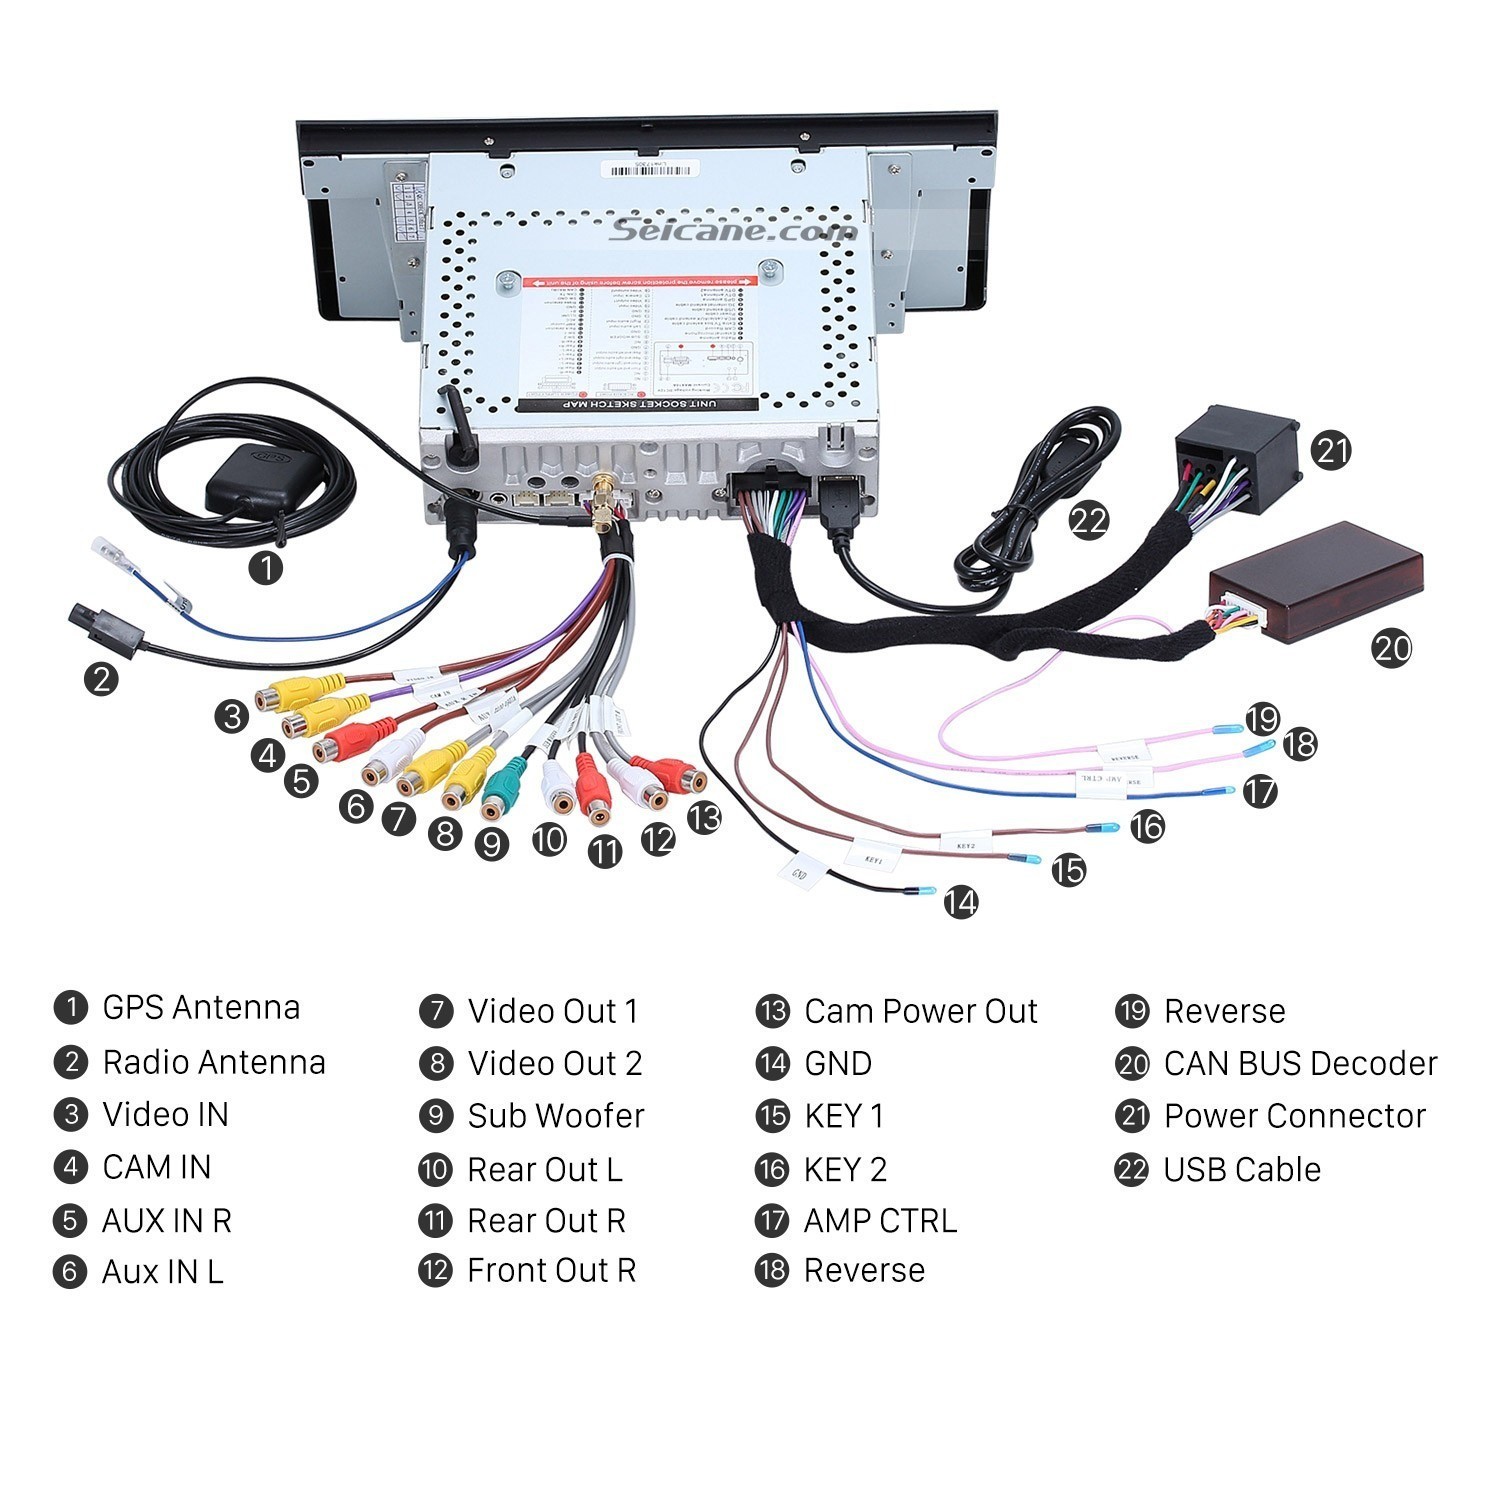 Wiring Diagram 20 Amp Plug Inspirationa Diagram Car Best Car Parts and Diagrams Insignia Se 2